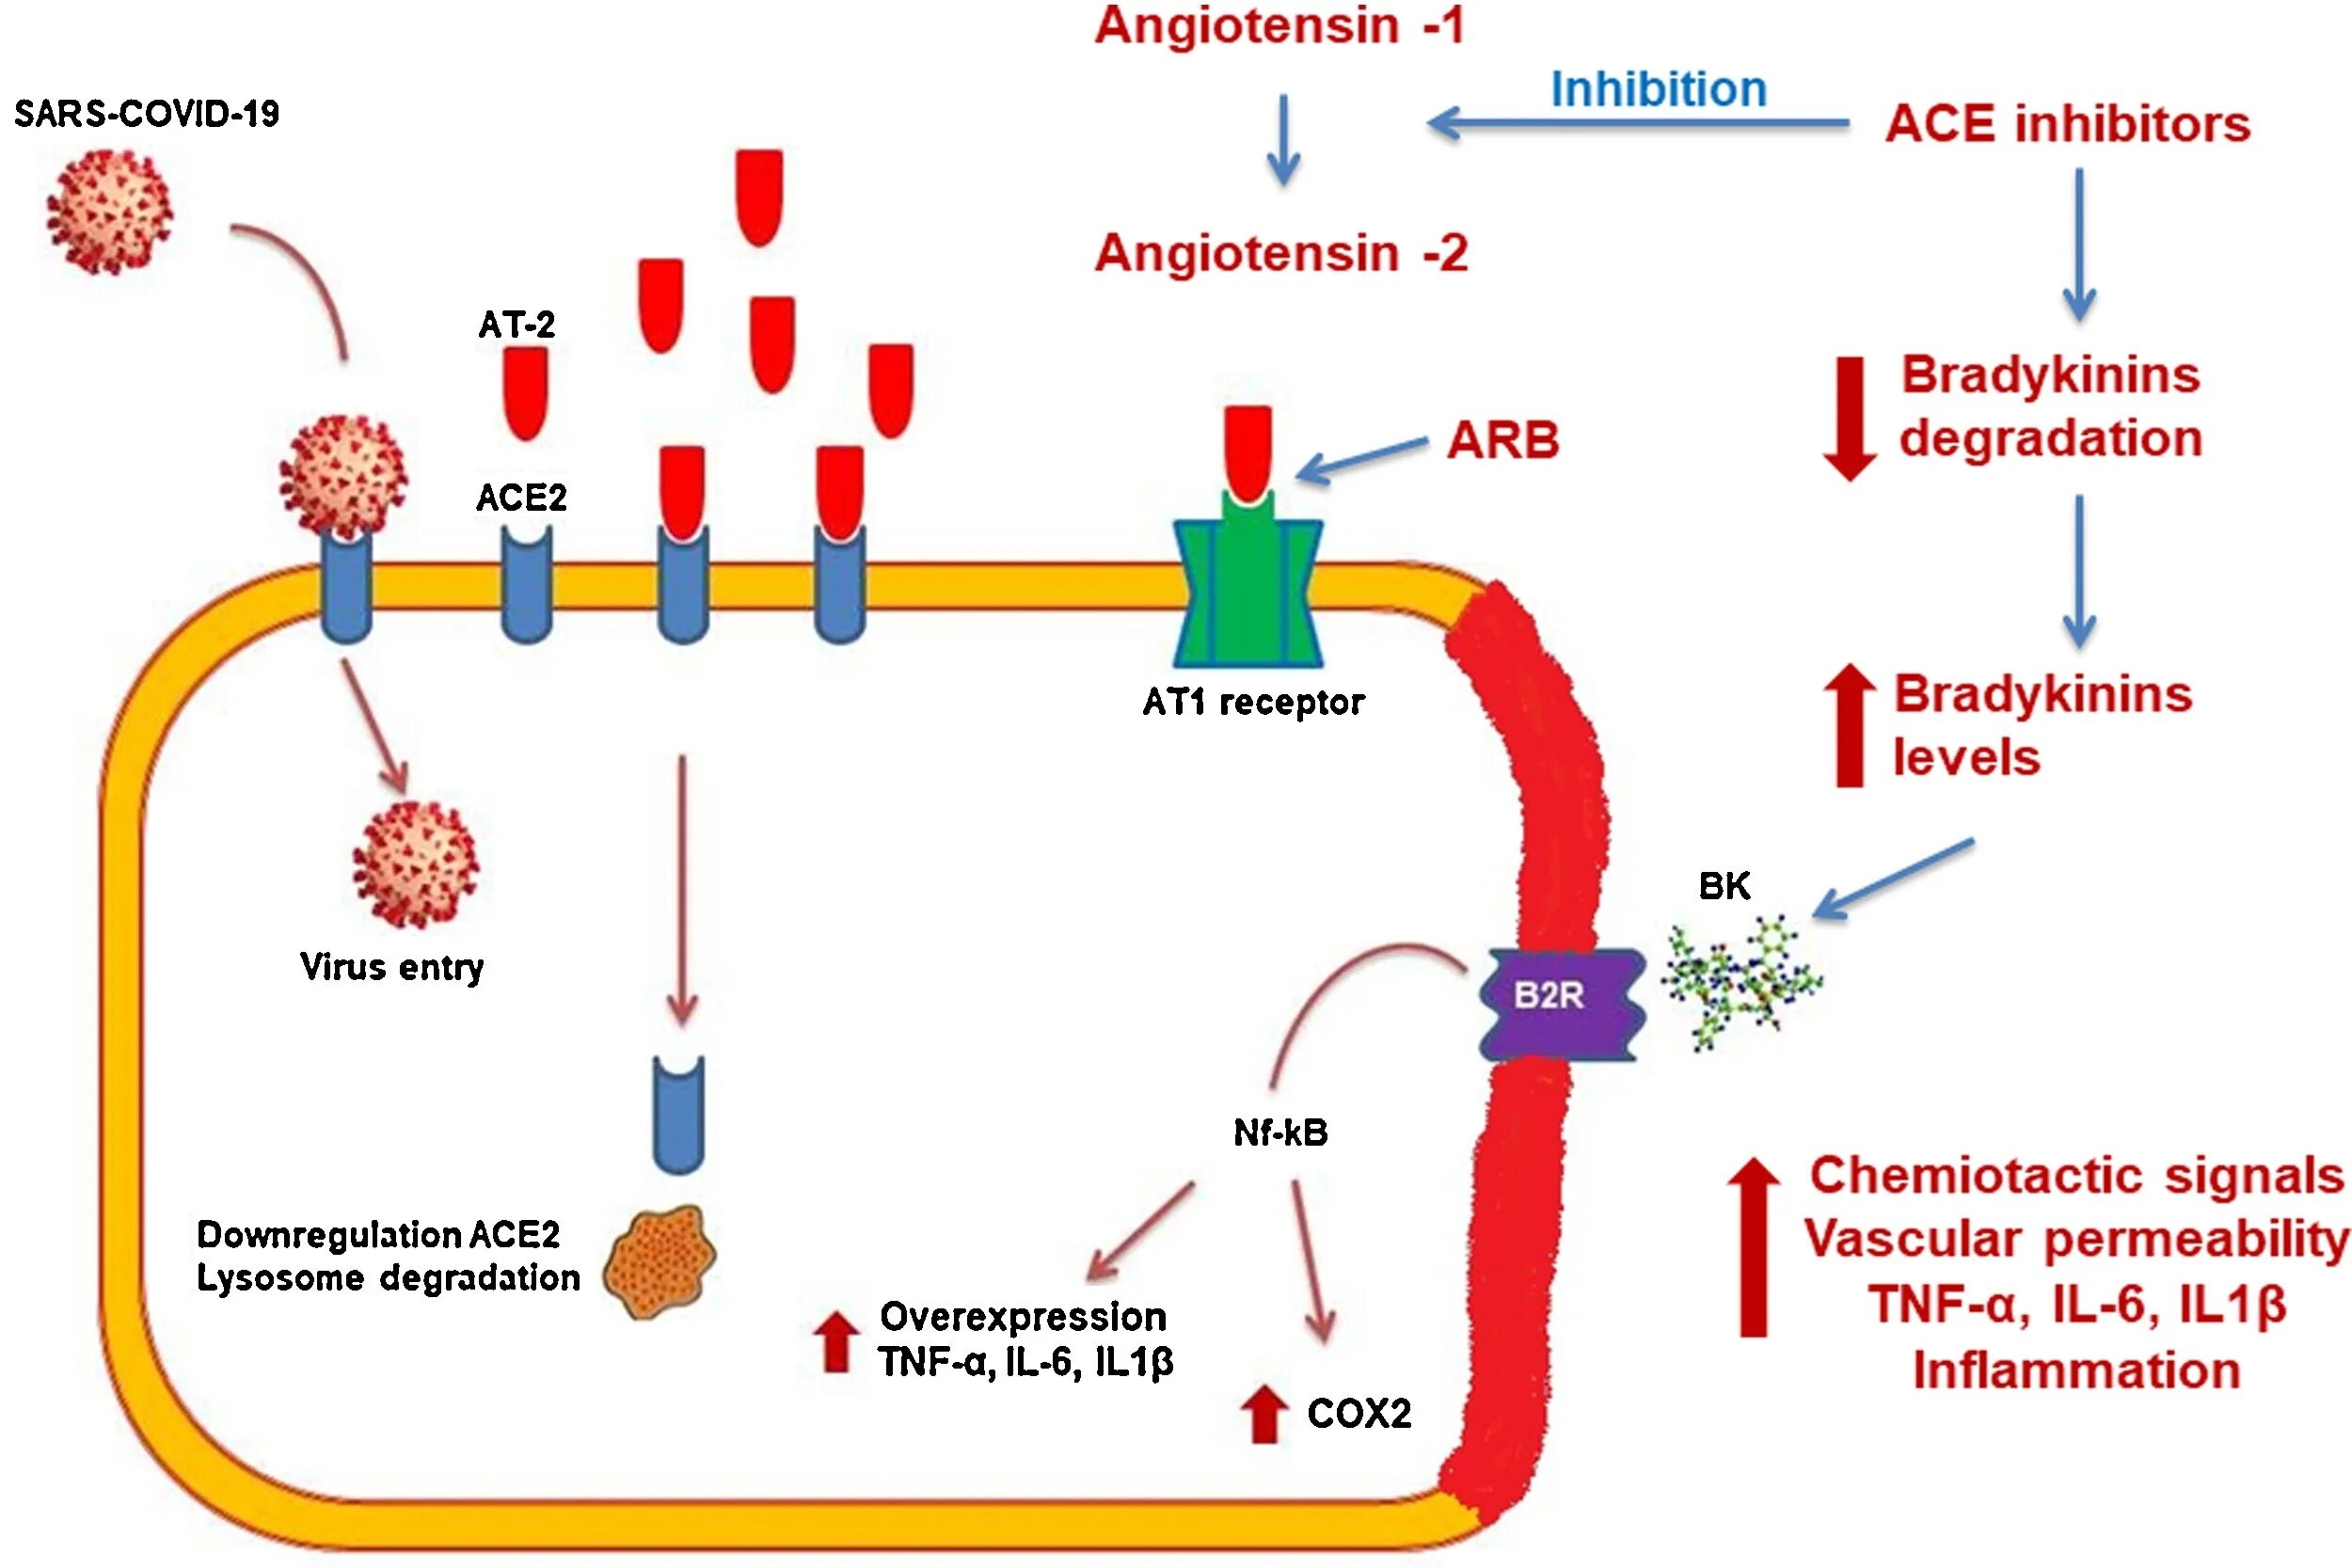 Ace inhibitors. Angiotensin receptor. Опухоль секретирующая ангиотензин II. Renin angiotensin Aldosterone System.